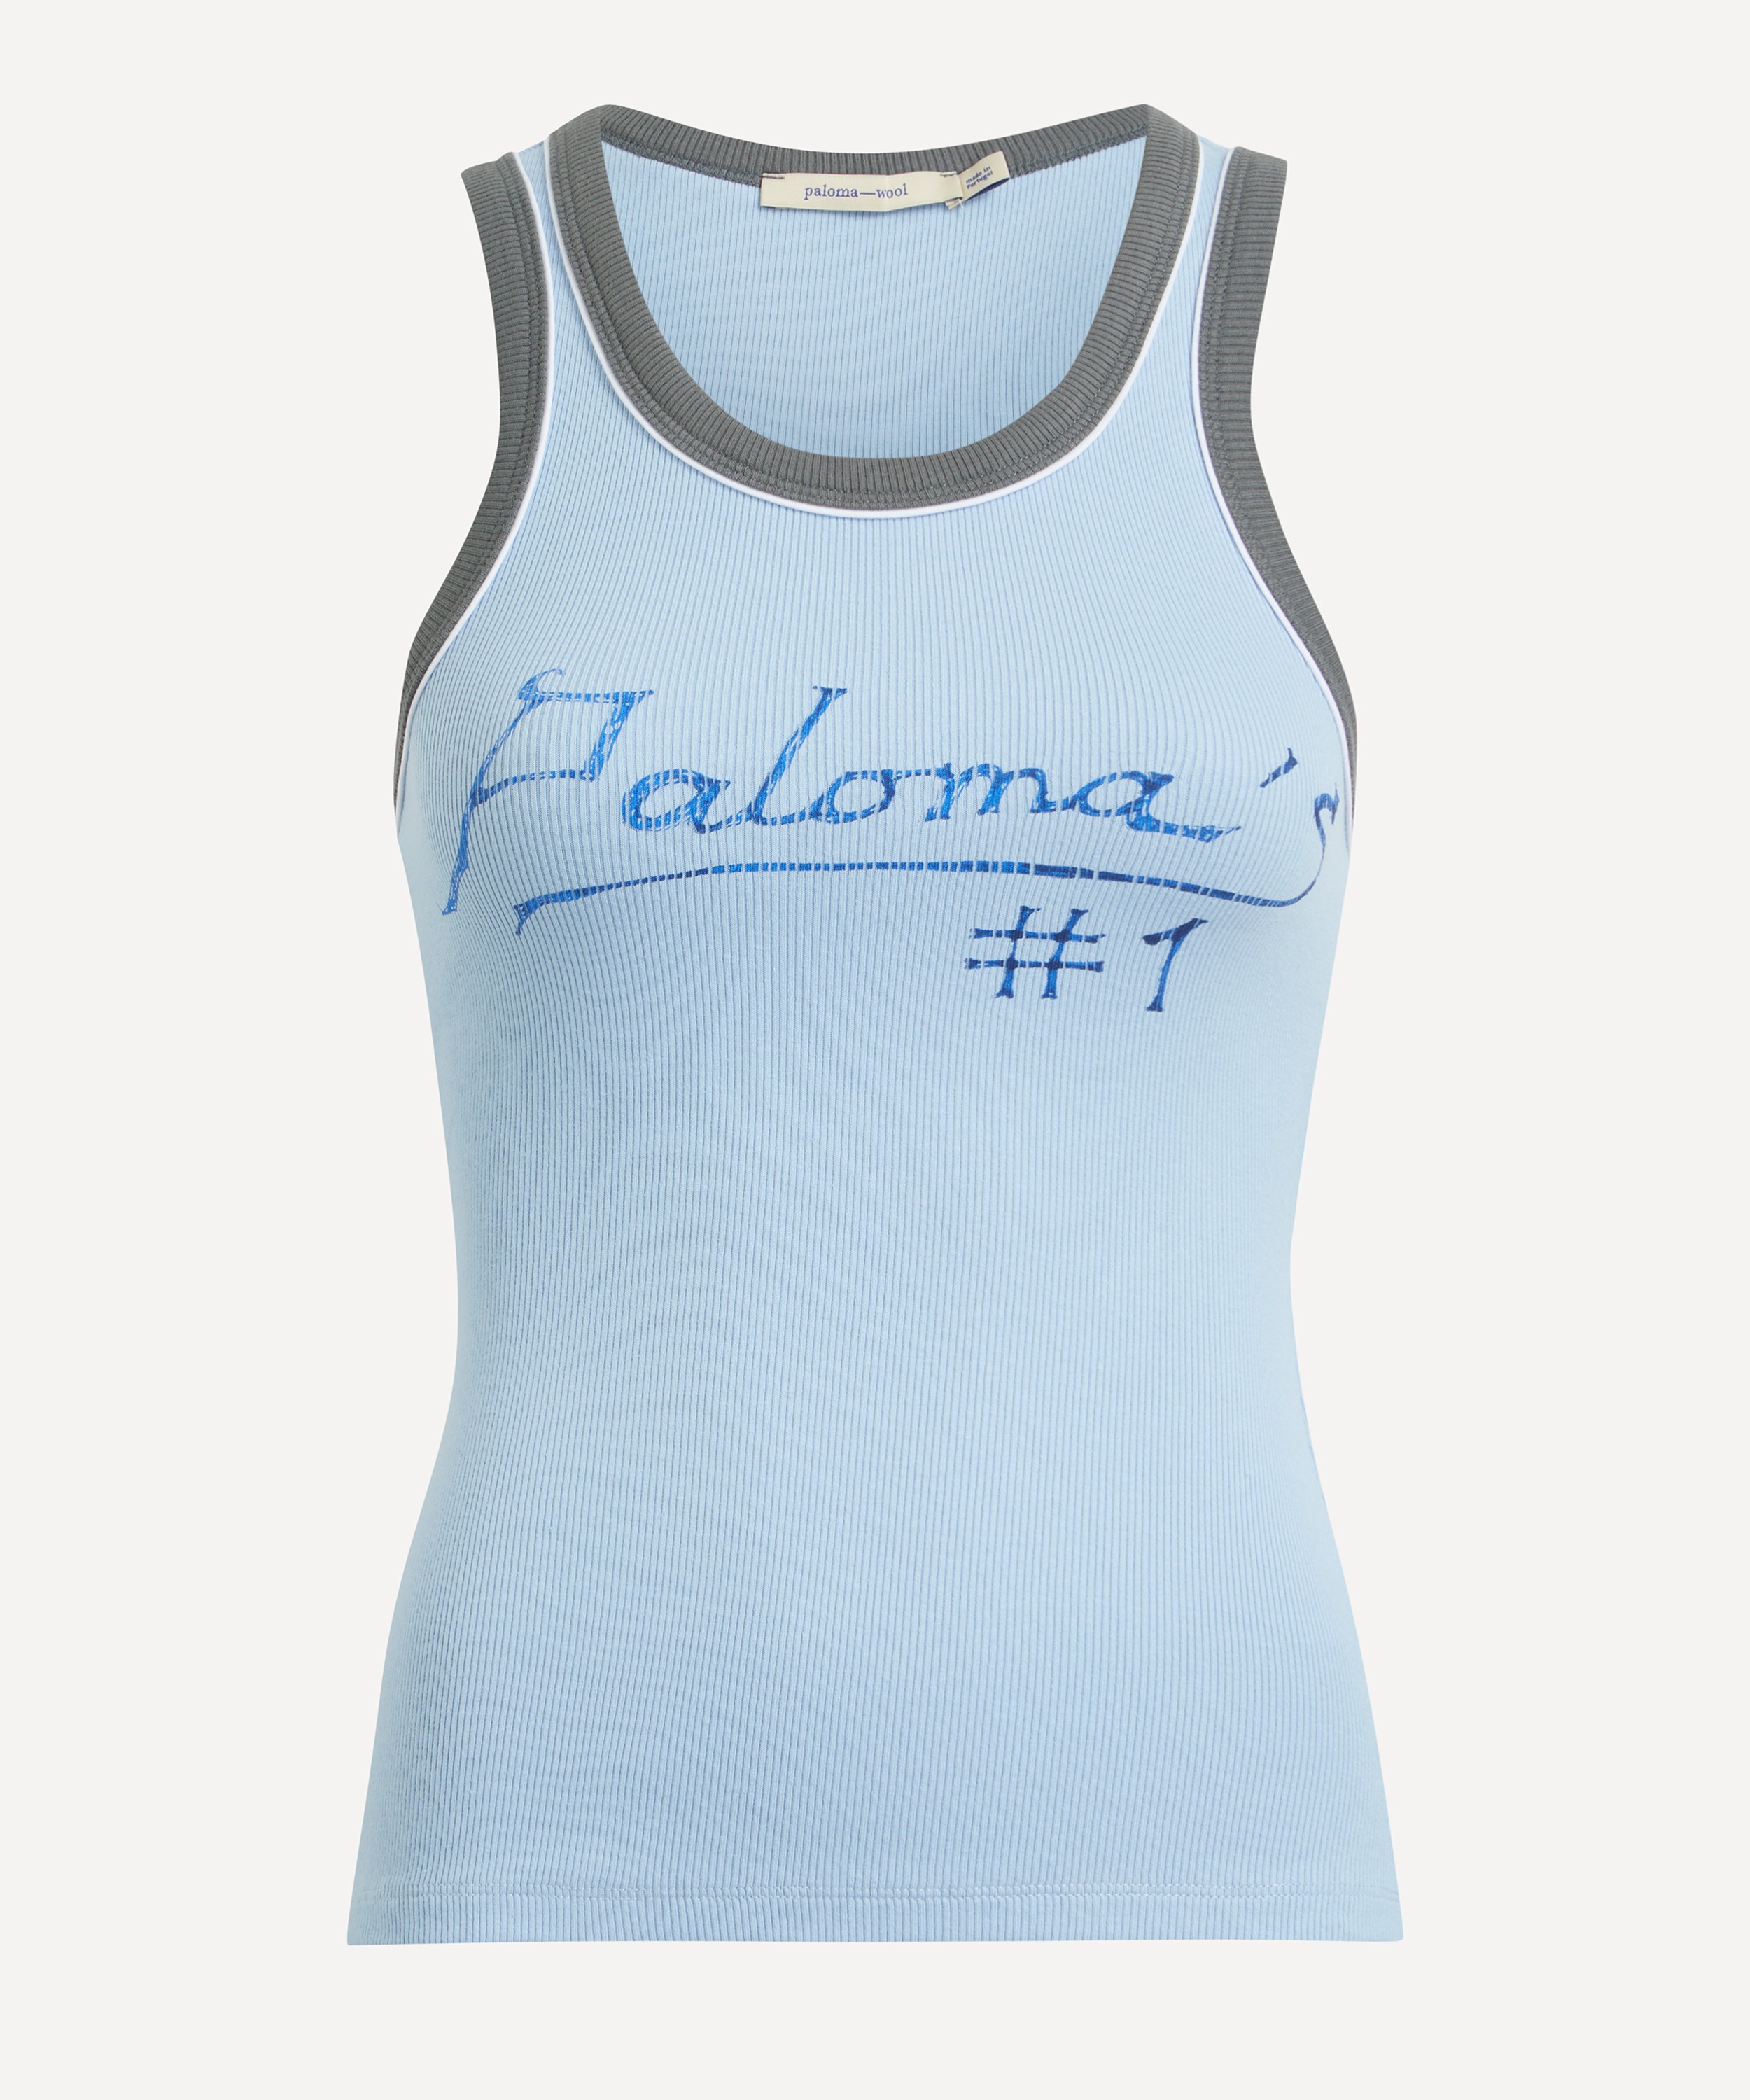 Paloma Wool - Paloma1 Logo Tank Top